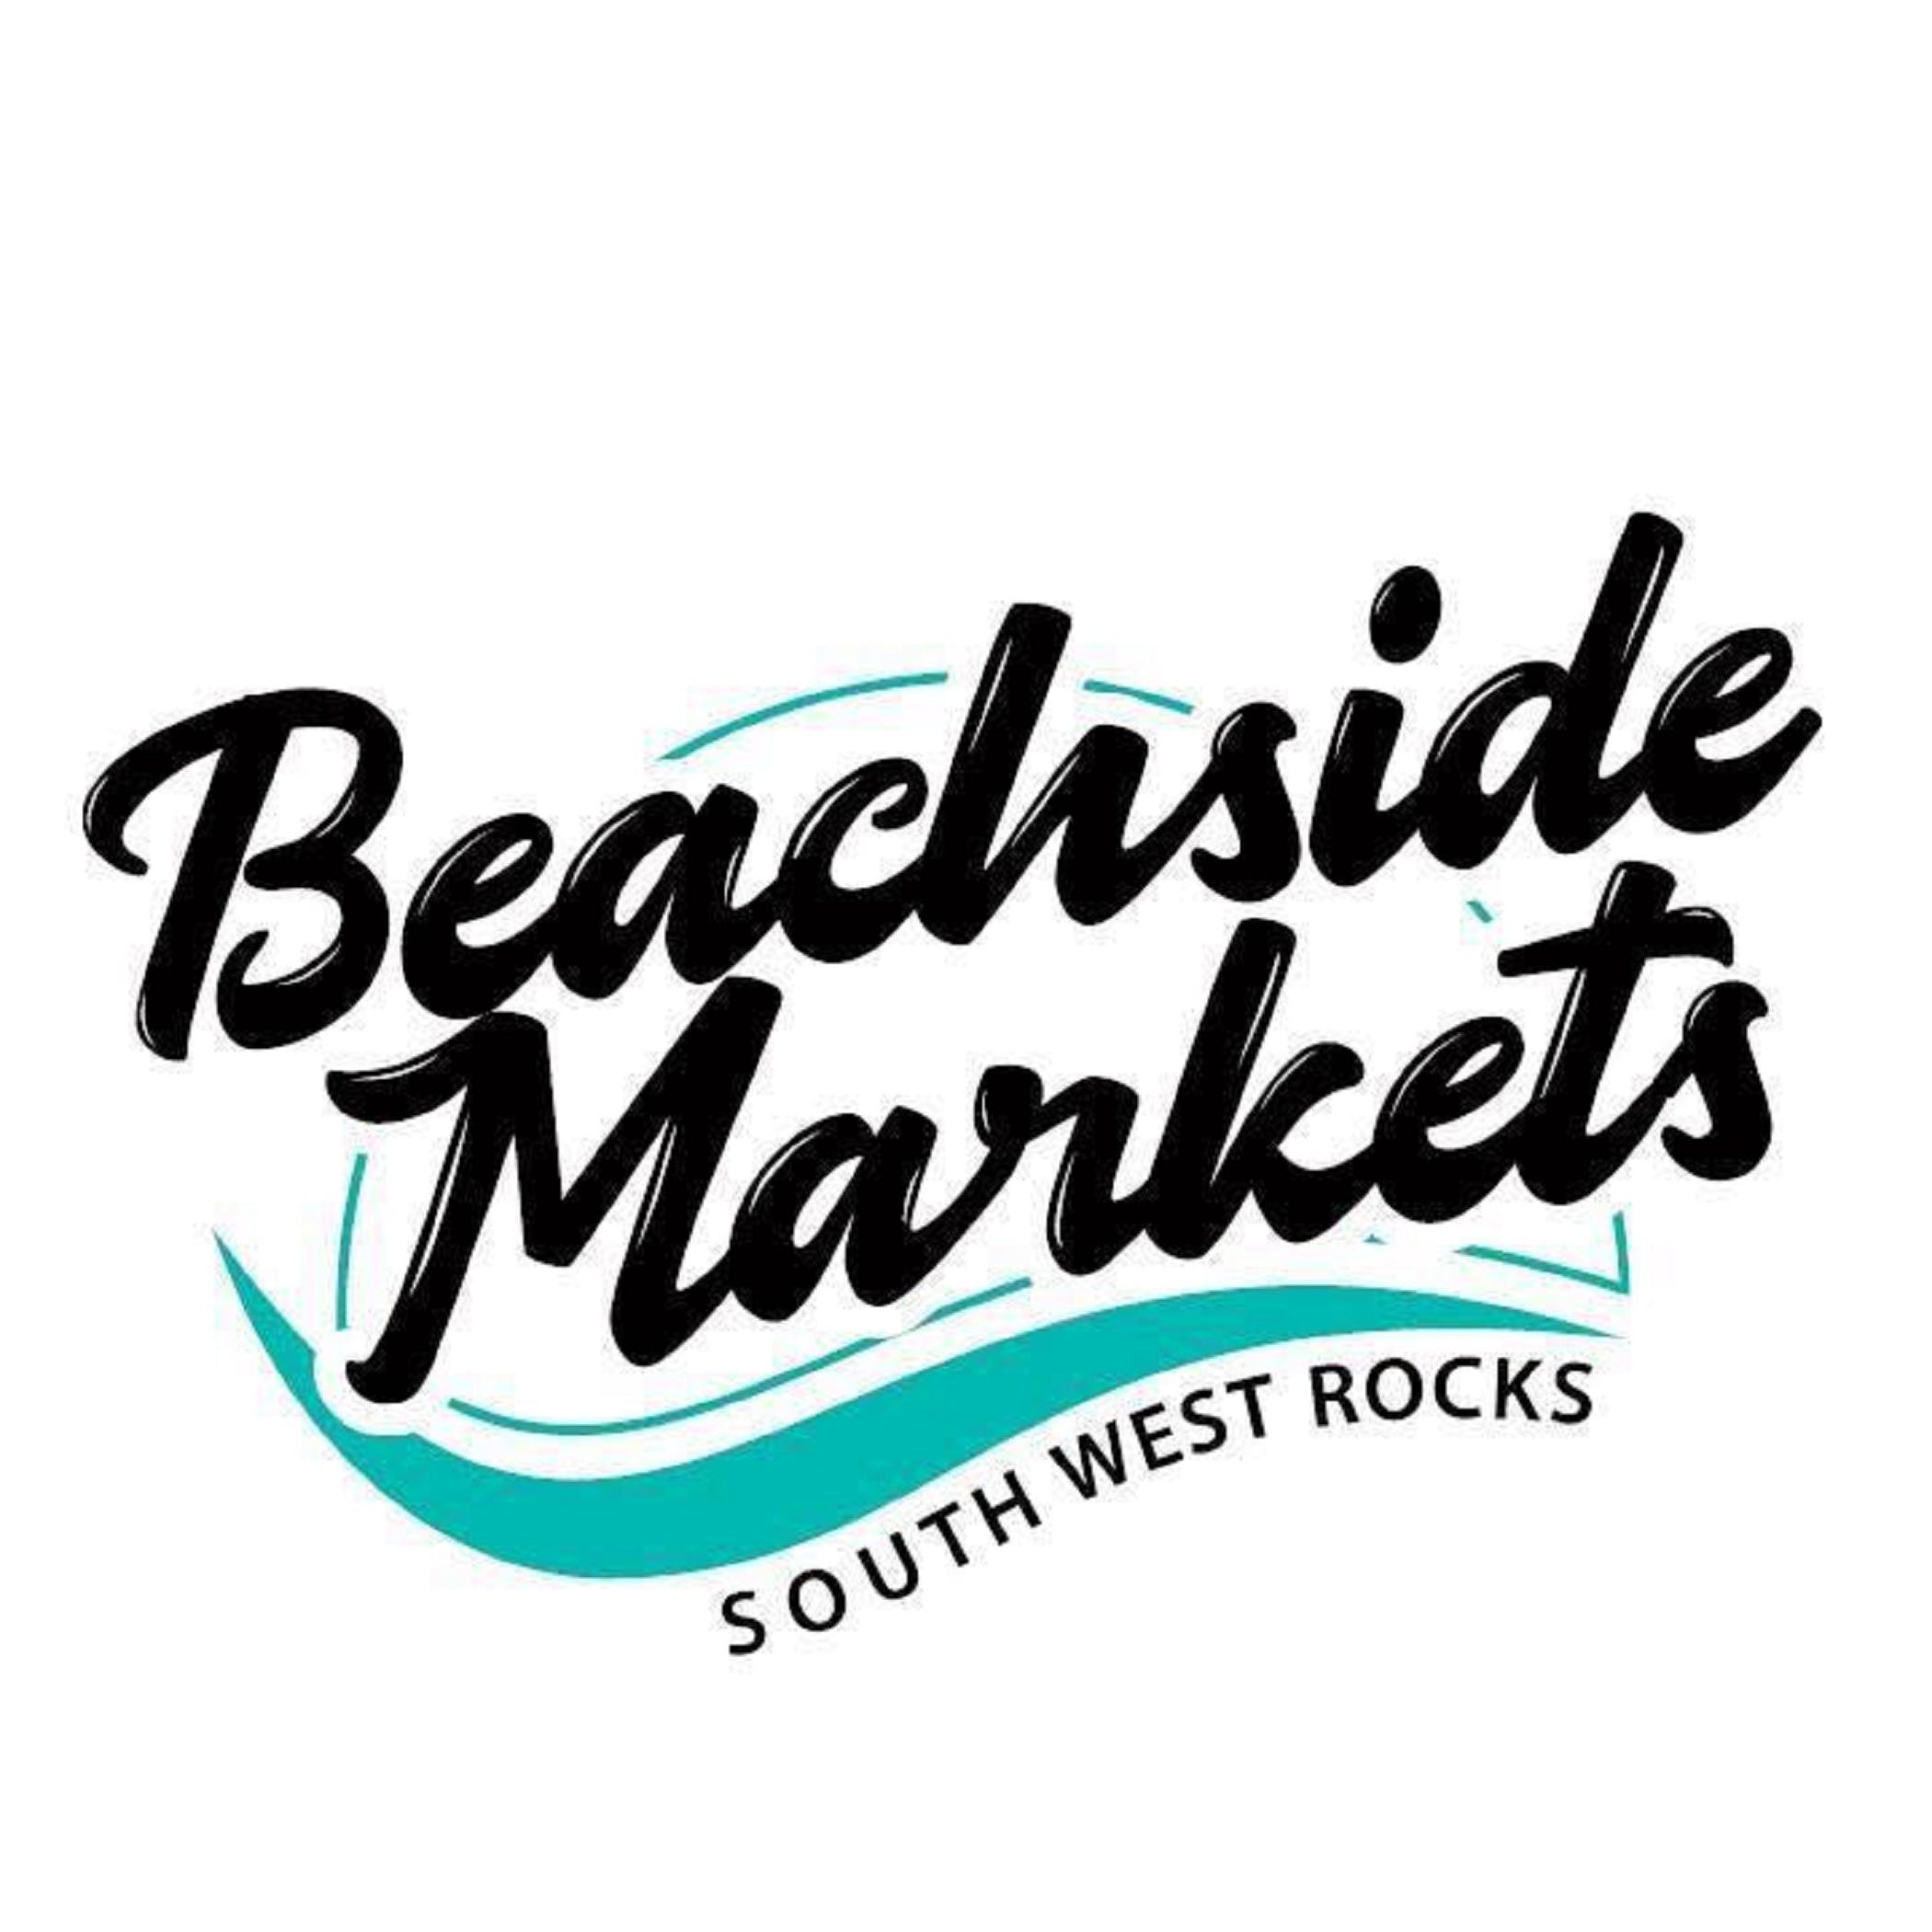 Beachside Markets South West Rocks - Surfers Gold Coast